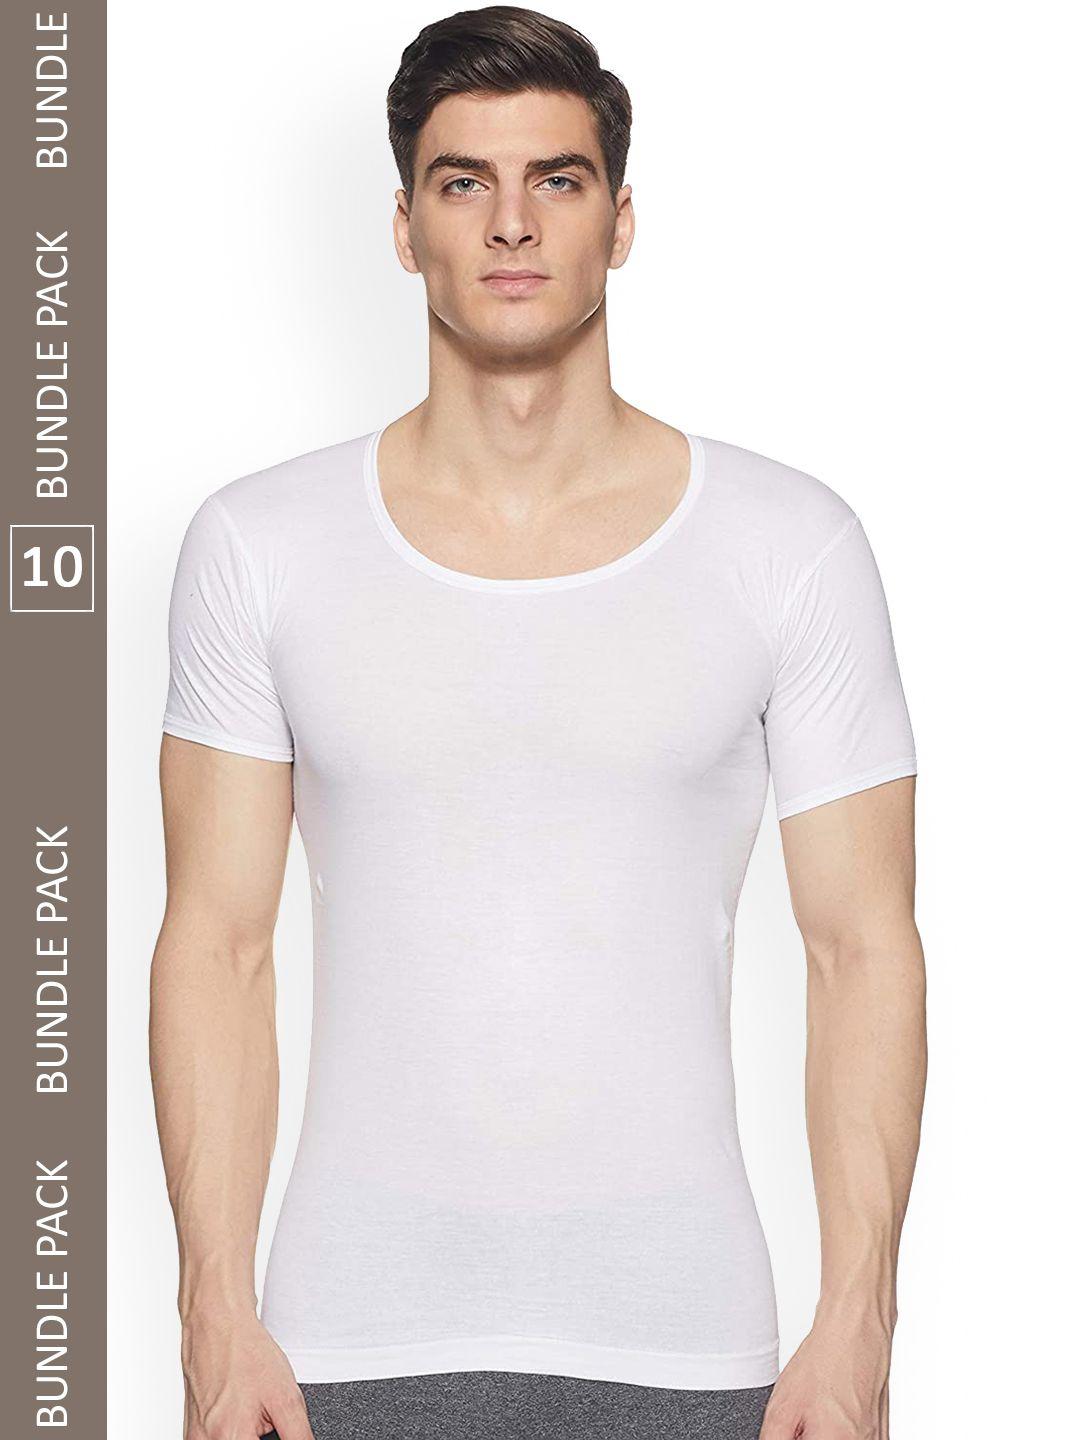 jon men pack of 10 pure cotton short sleeves basic innerwear vests